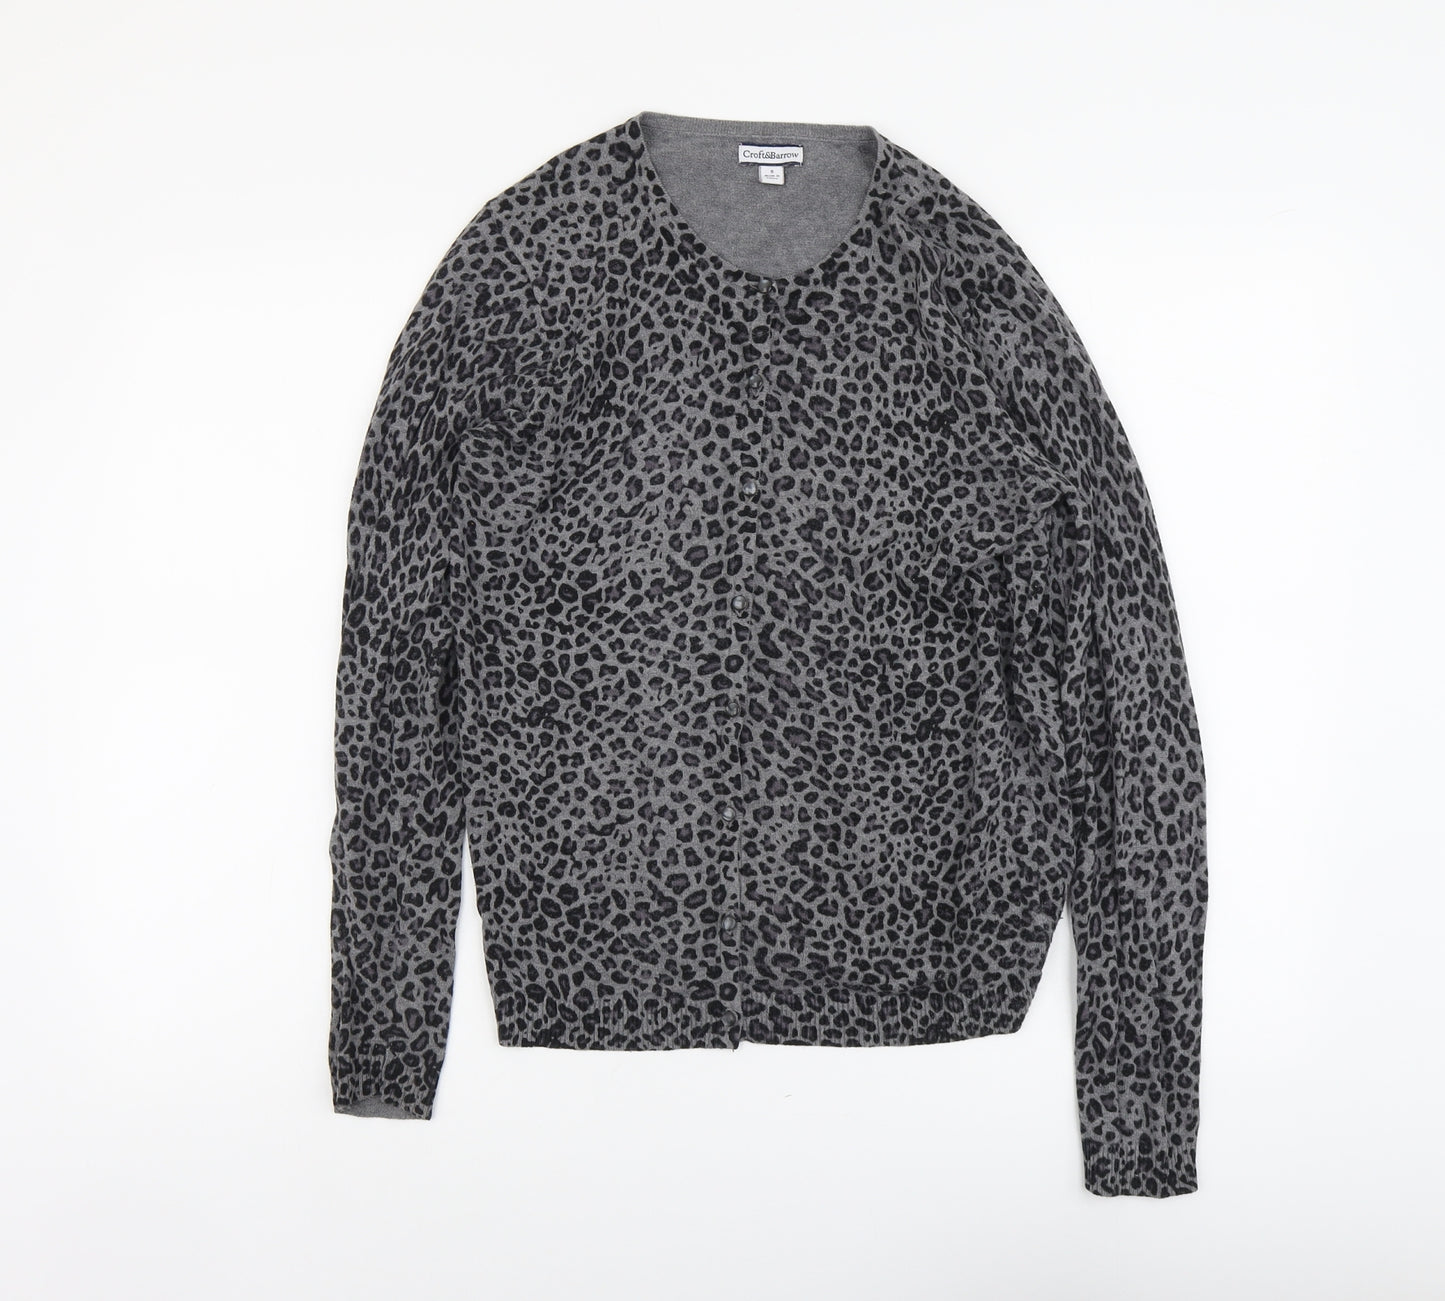 Croft & Barrow Womens Grey Round Neck Animal Print Cotton Cardigan Jumper Size S - Leopard print